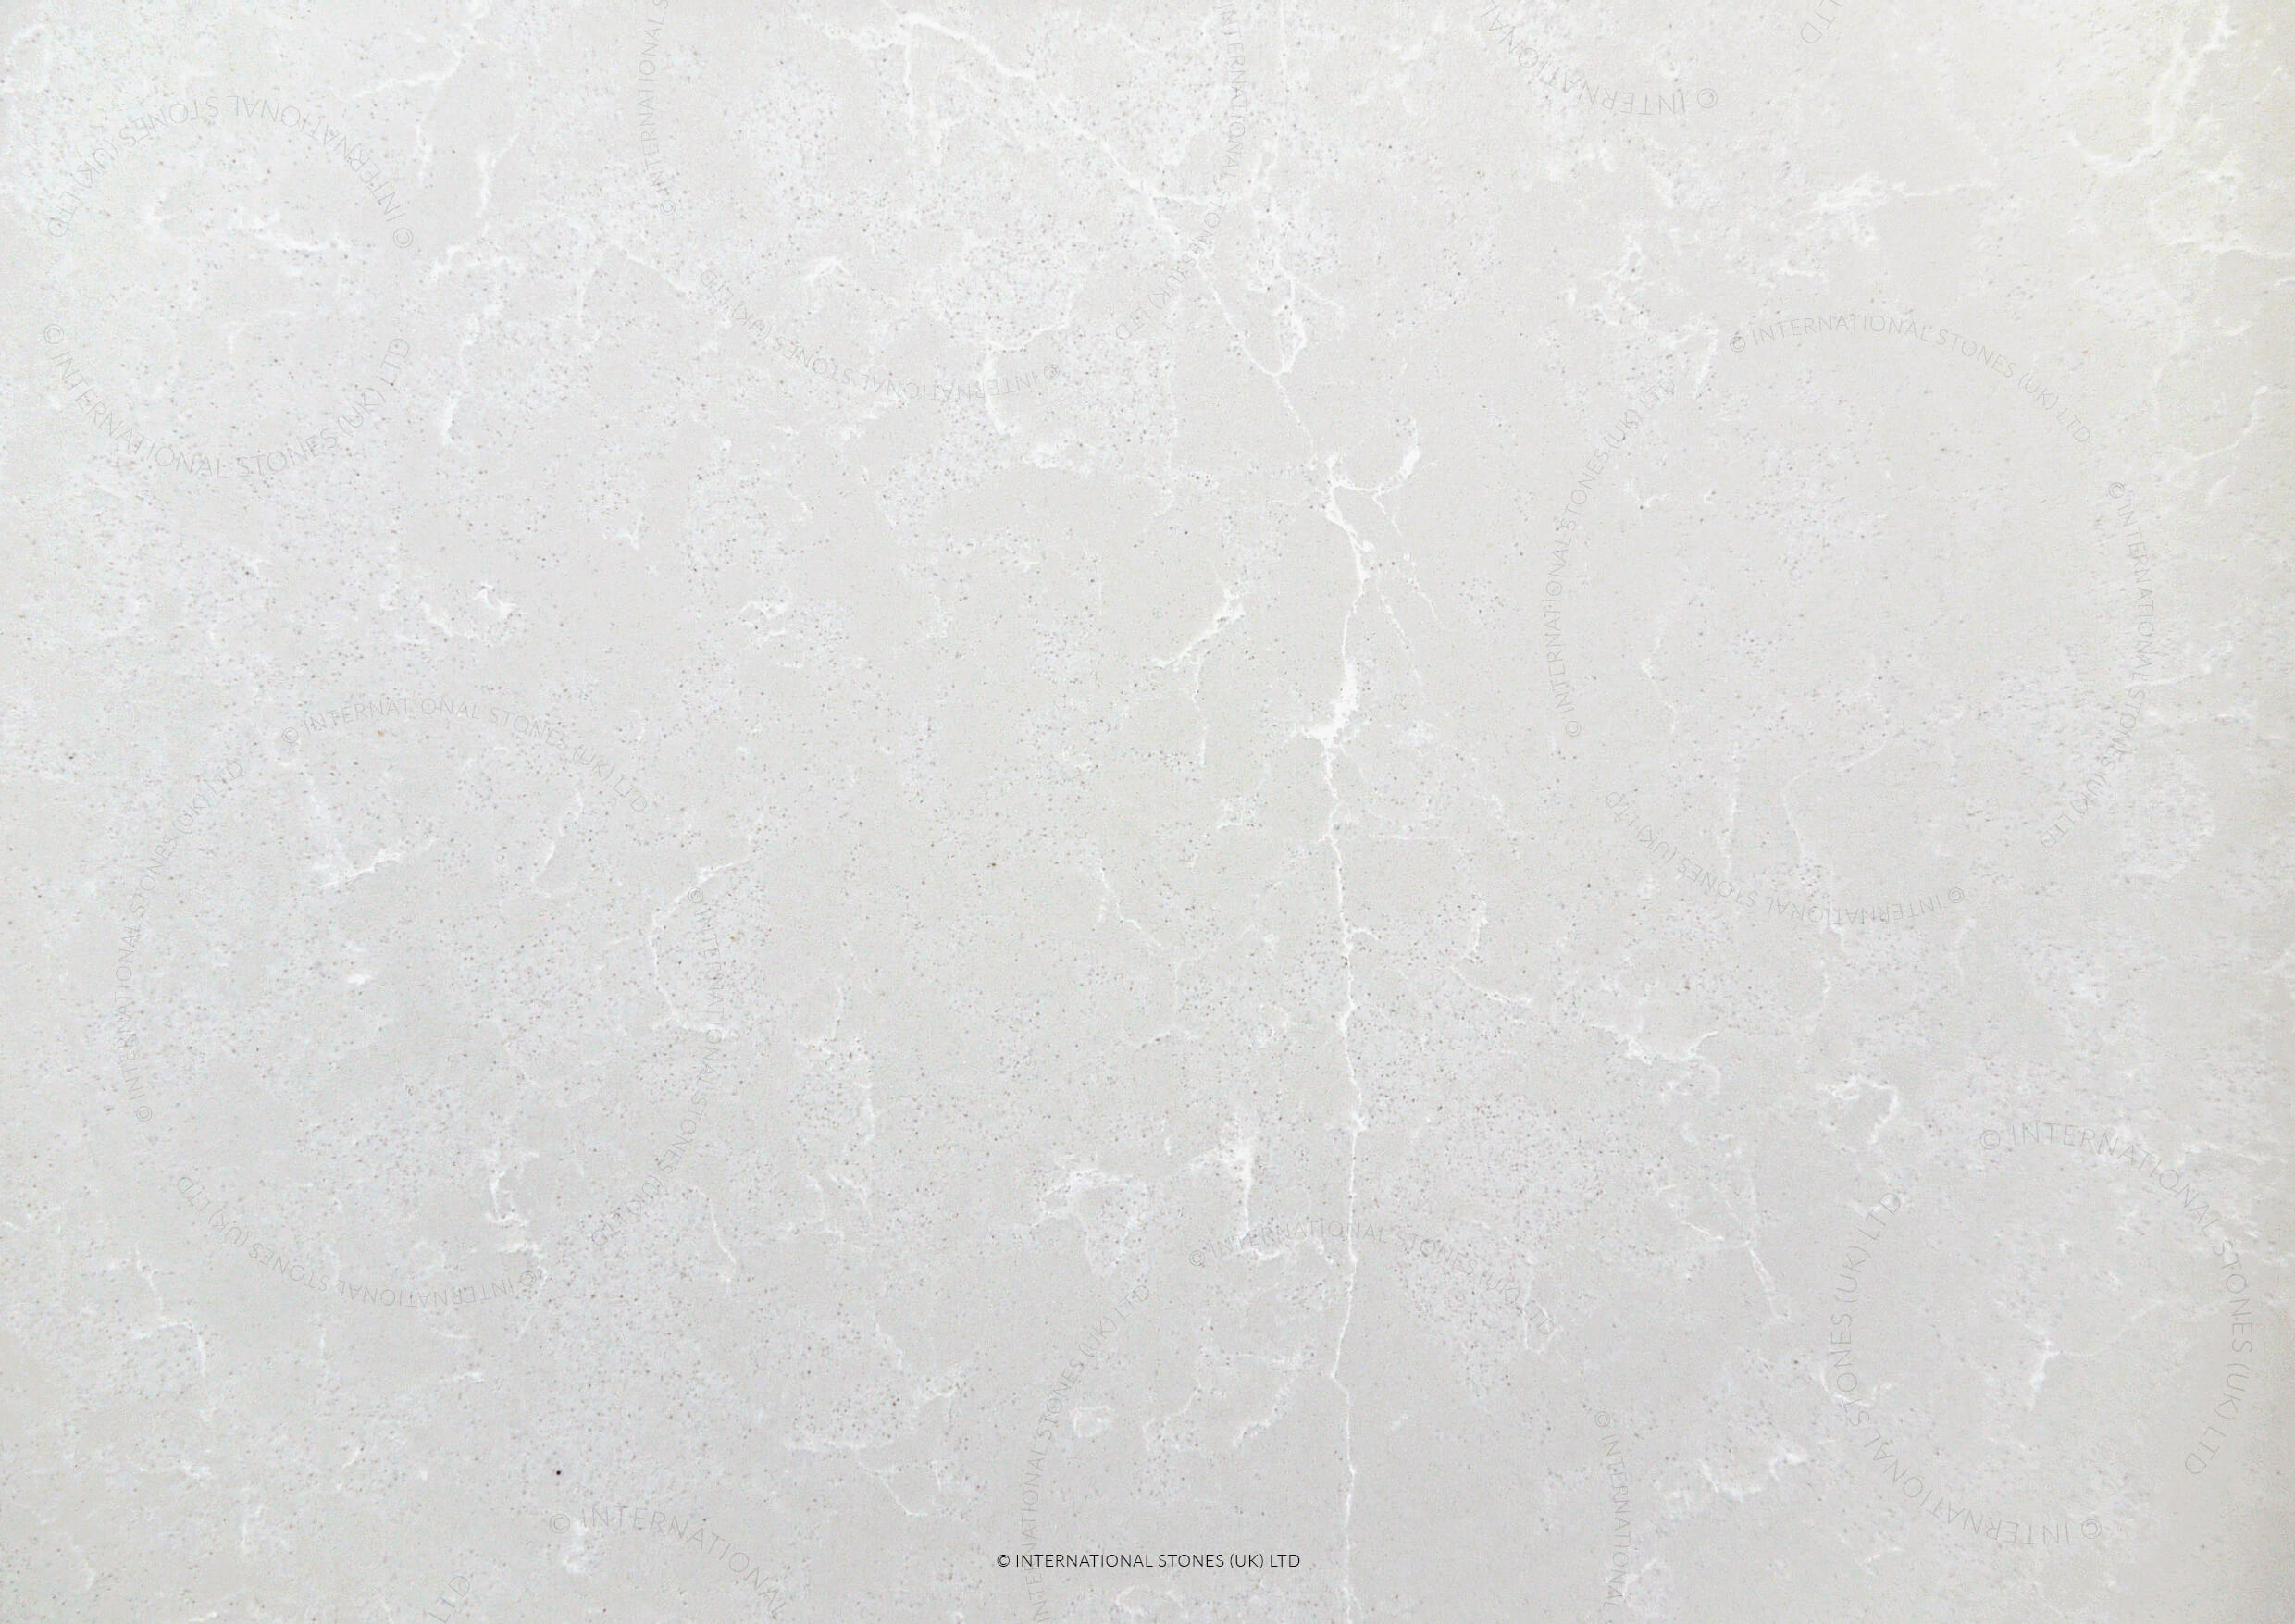 International Stone IQ Desert Silver - worcester - Leominster
